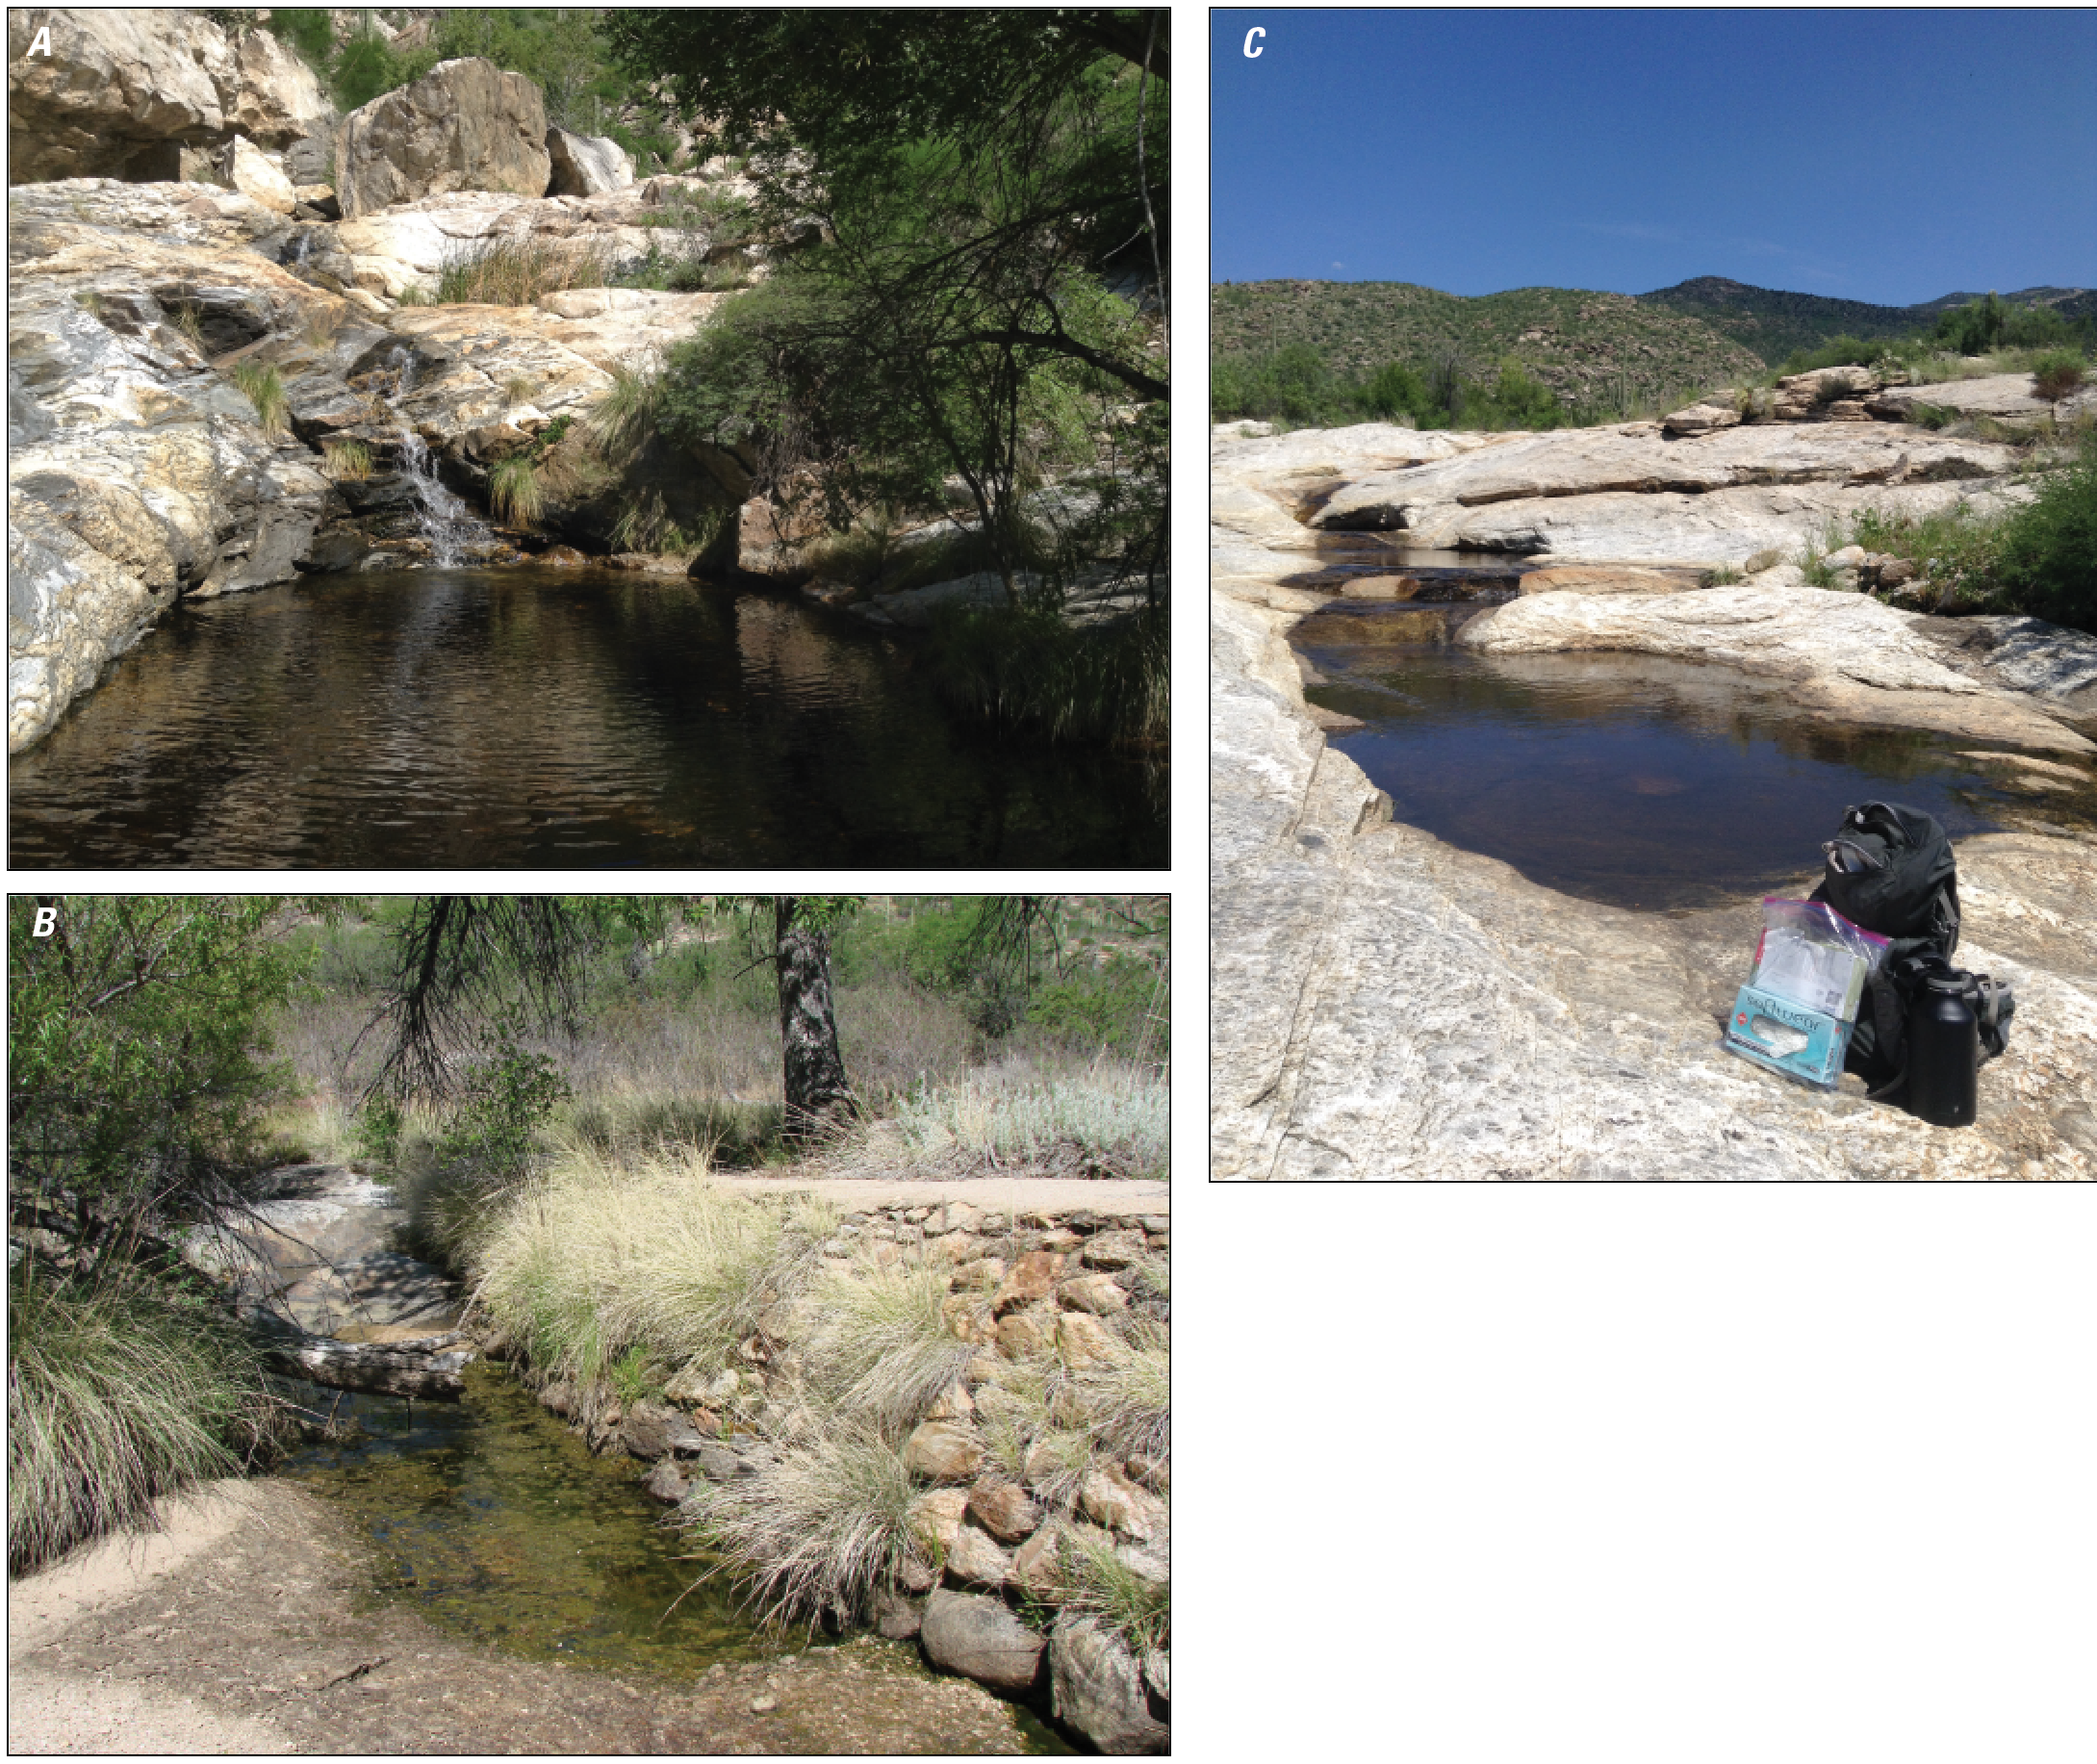 Photographs of Madrona Canyon pools and sampling locations.